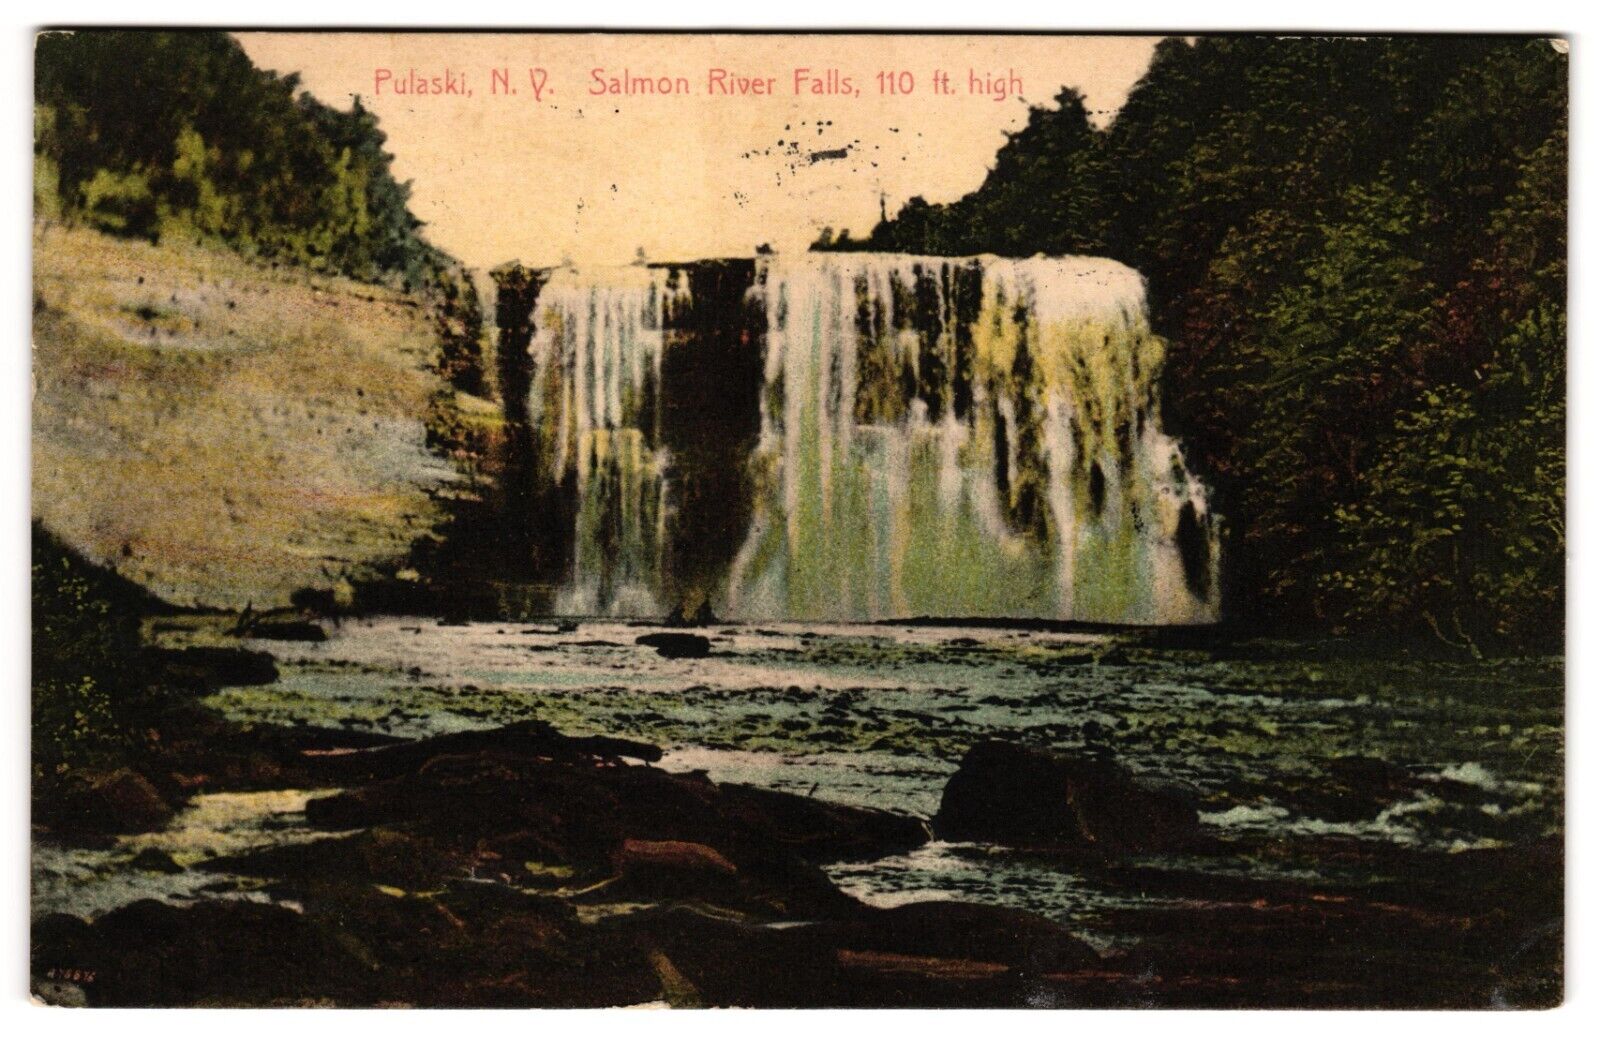 Salmon River Falls 110 ft. high Pulaski NY New York c1900s Posted Postcard